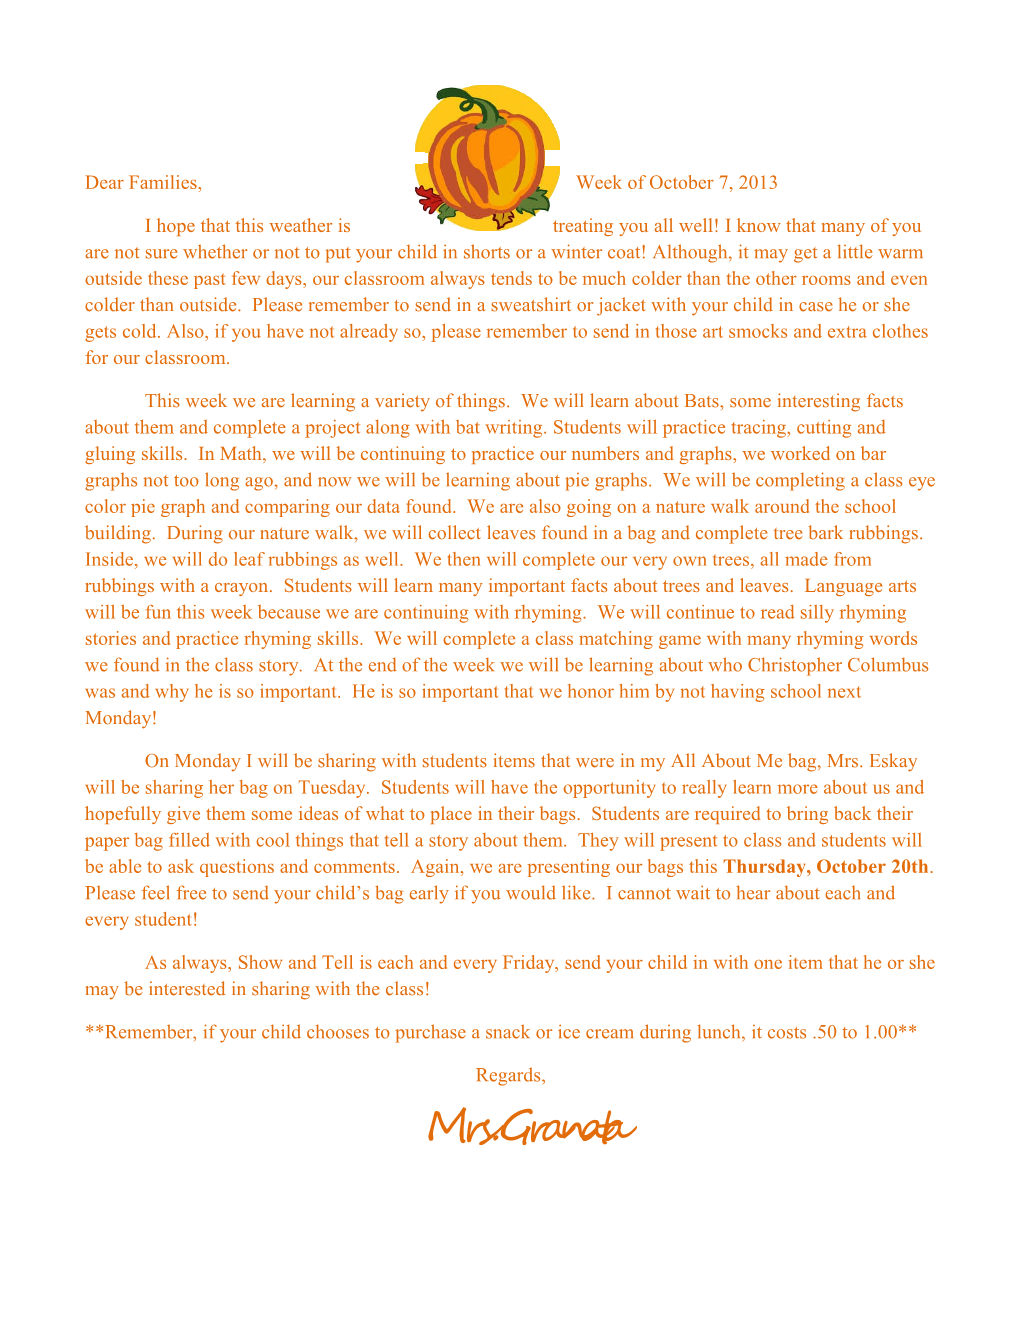 Dear Families, Week of October 7, 2013